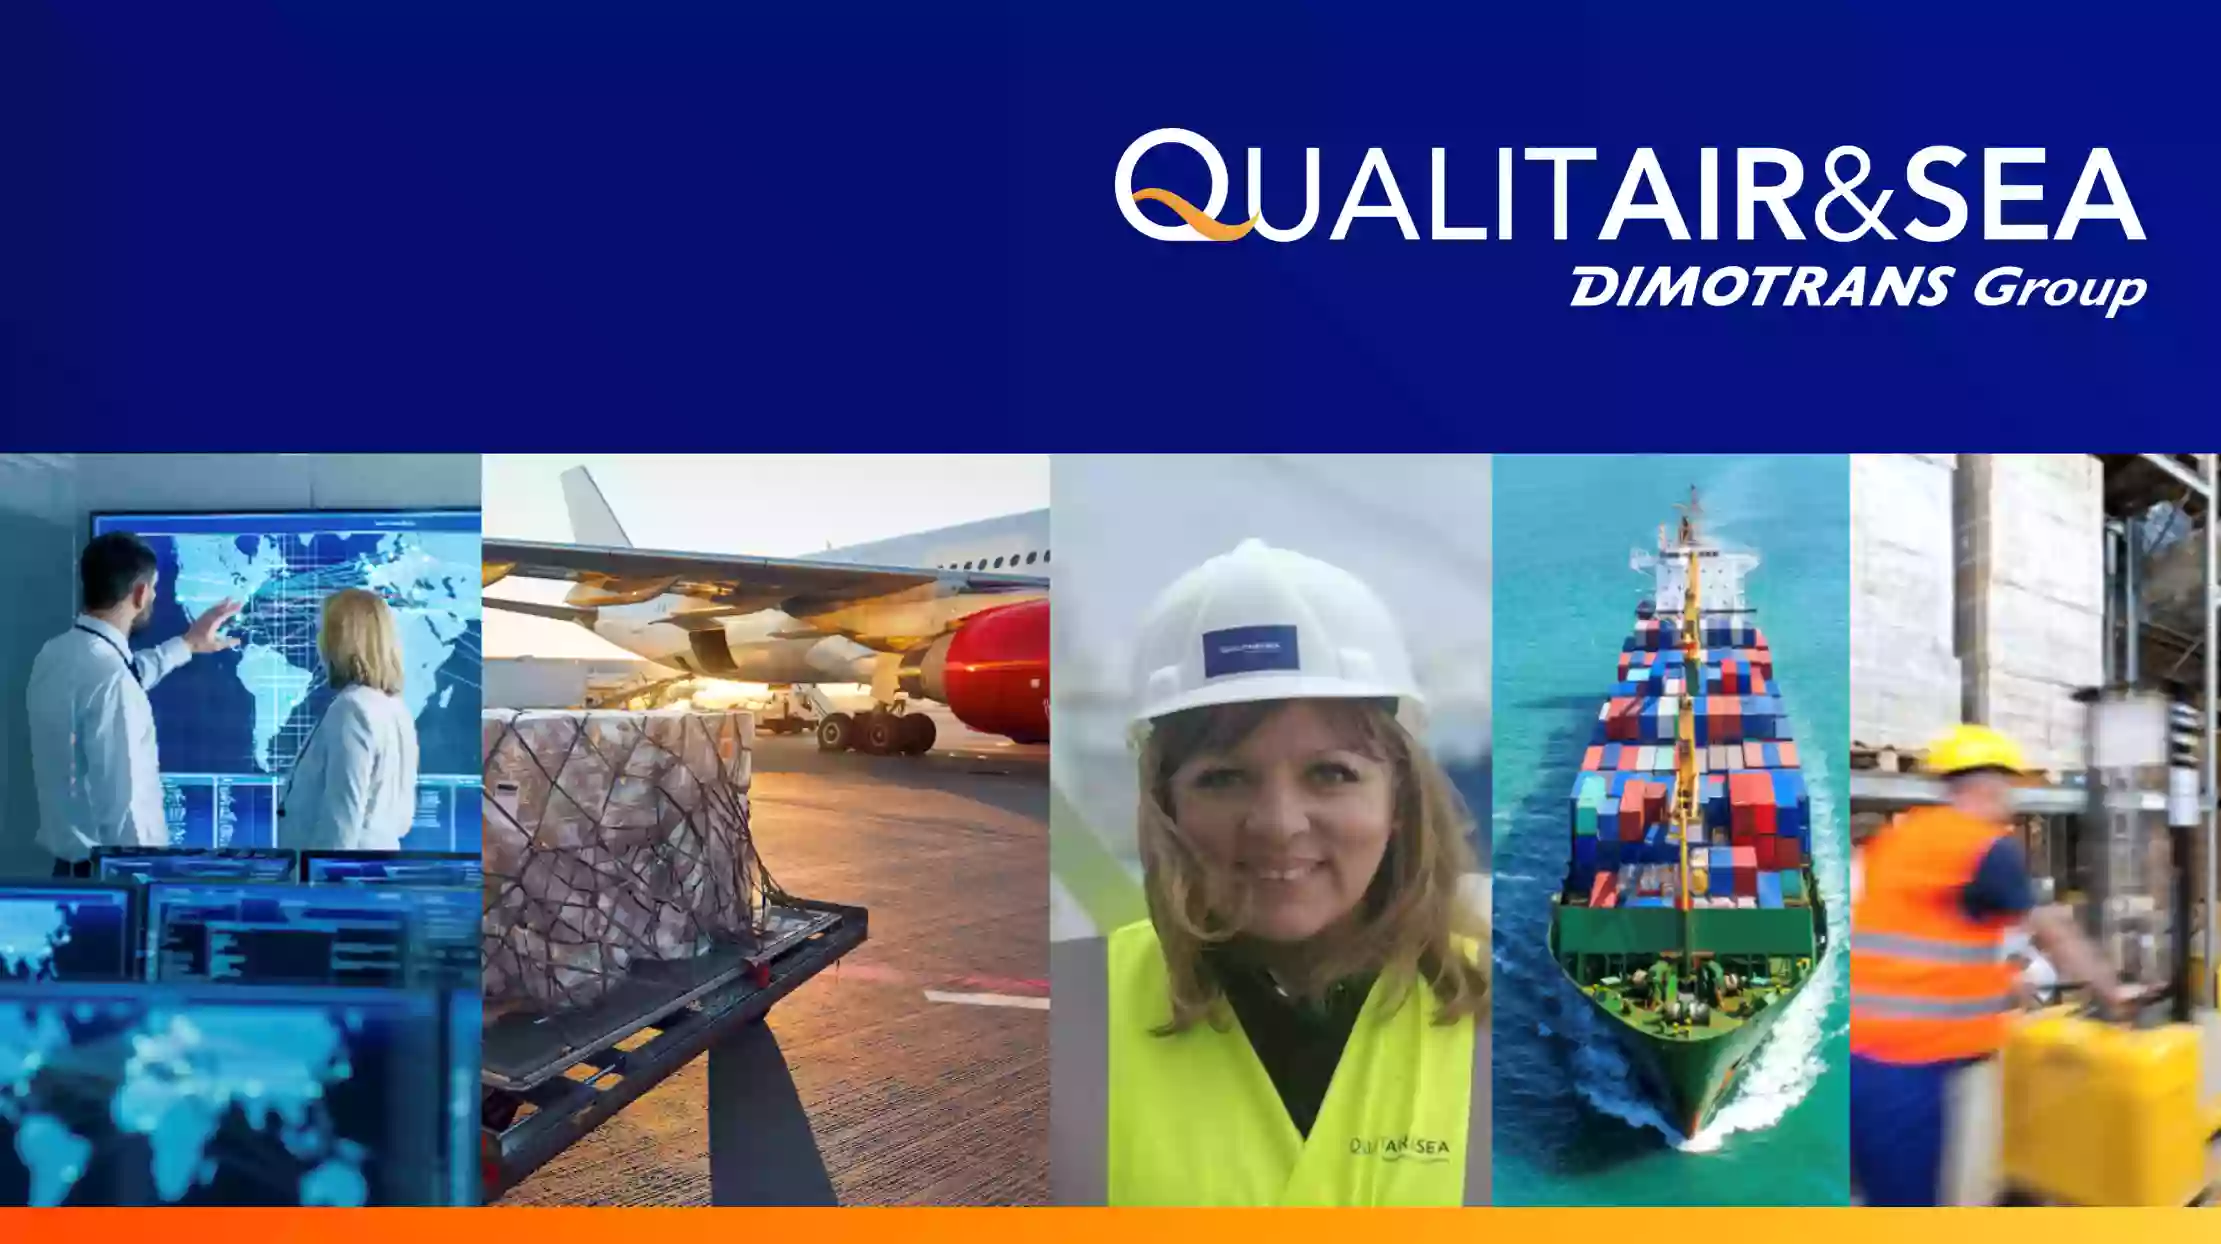 QUALITAIR&SEA DIMOTRANS Group Orléans